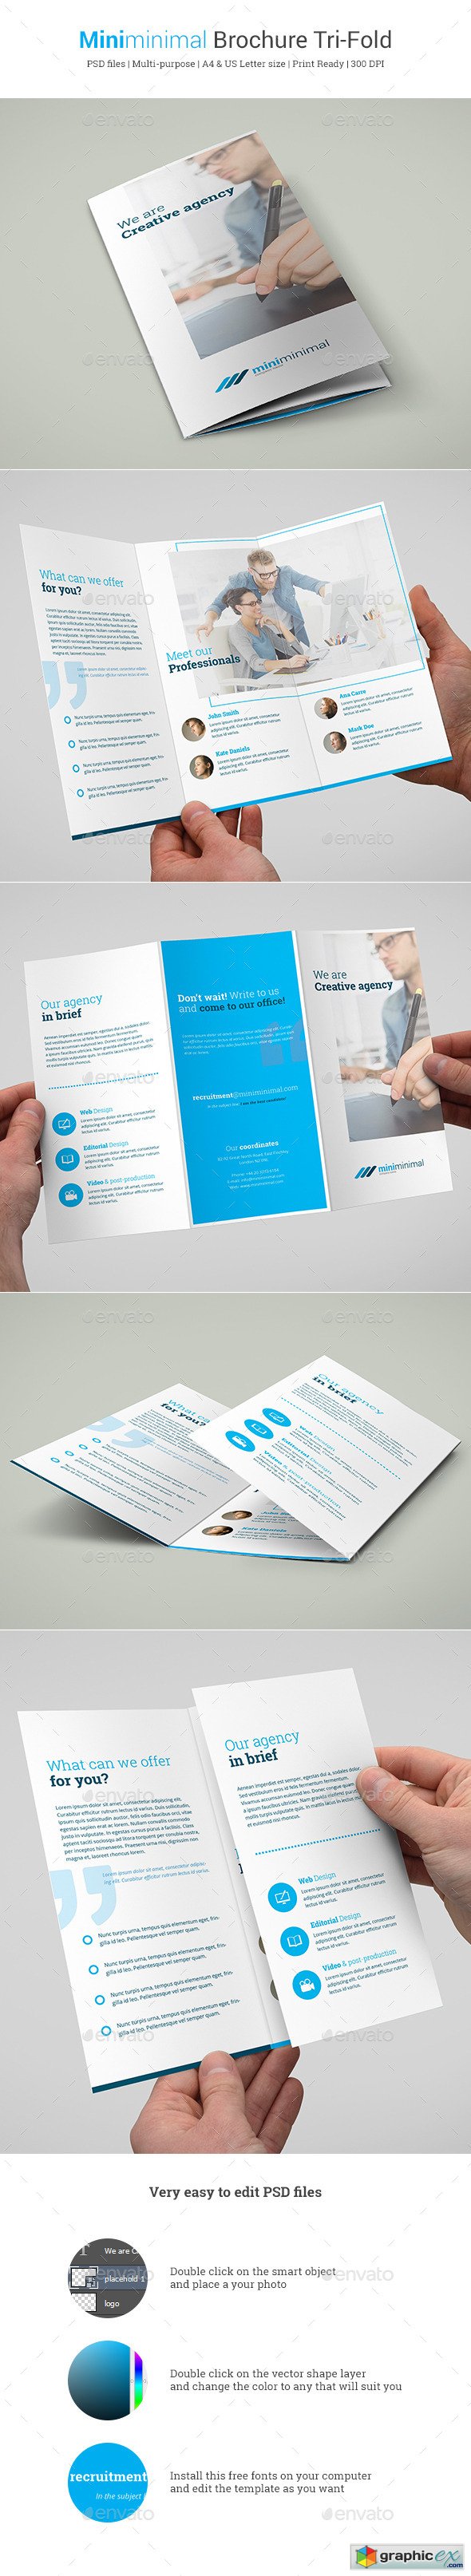 Miniminimal Brochure Tri-Fold